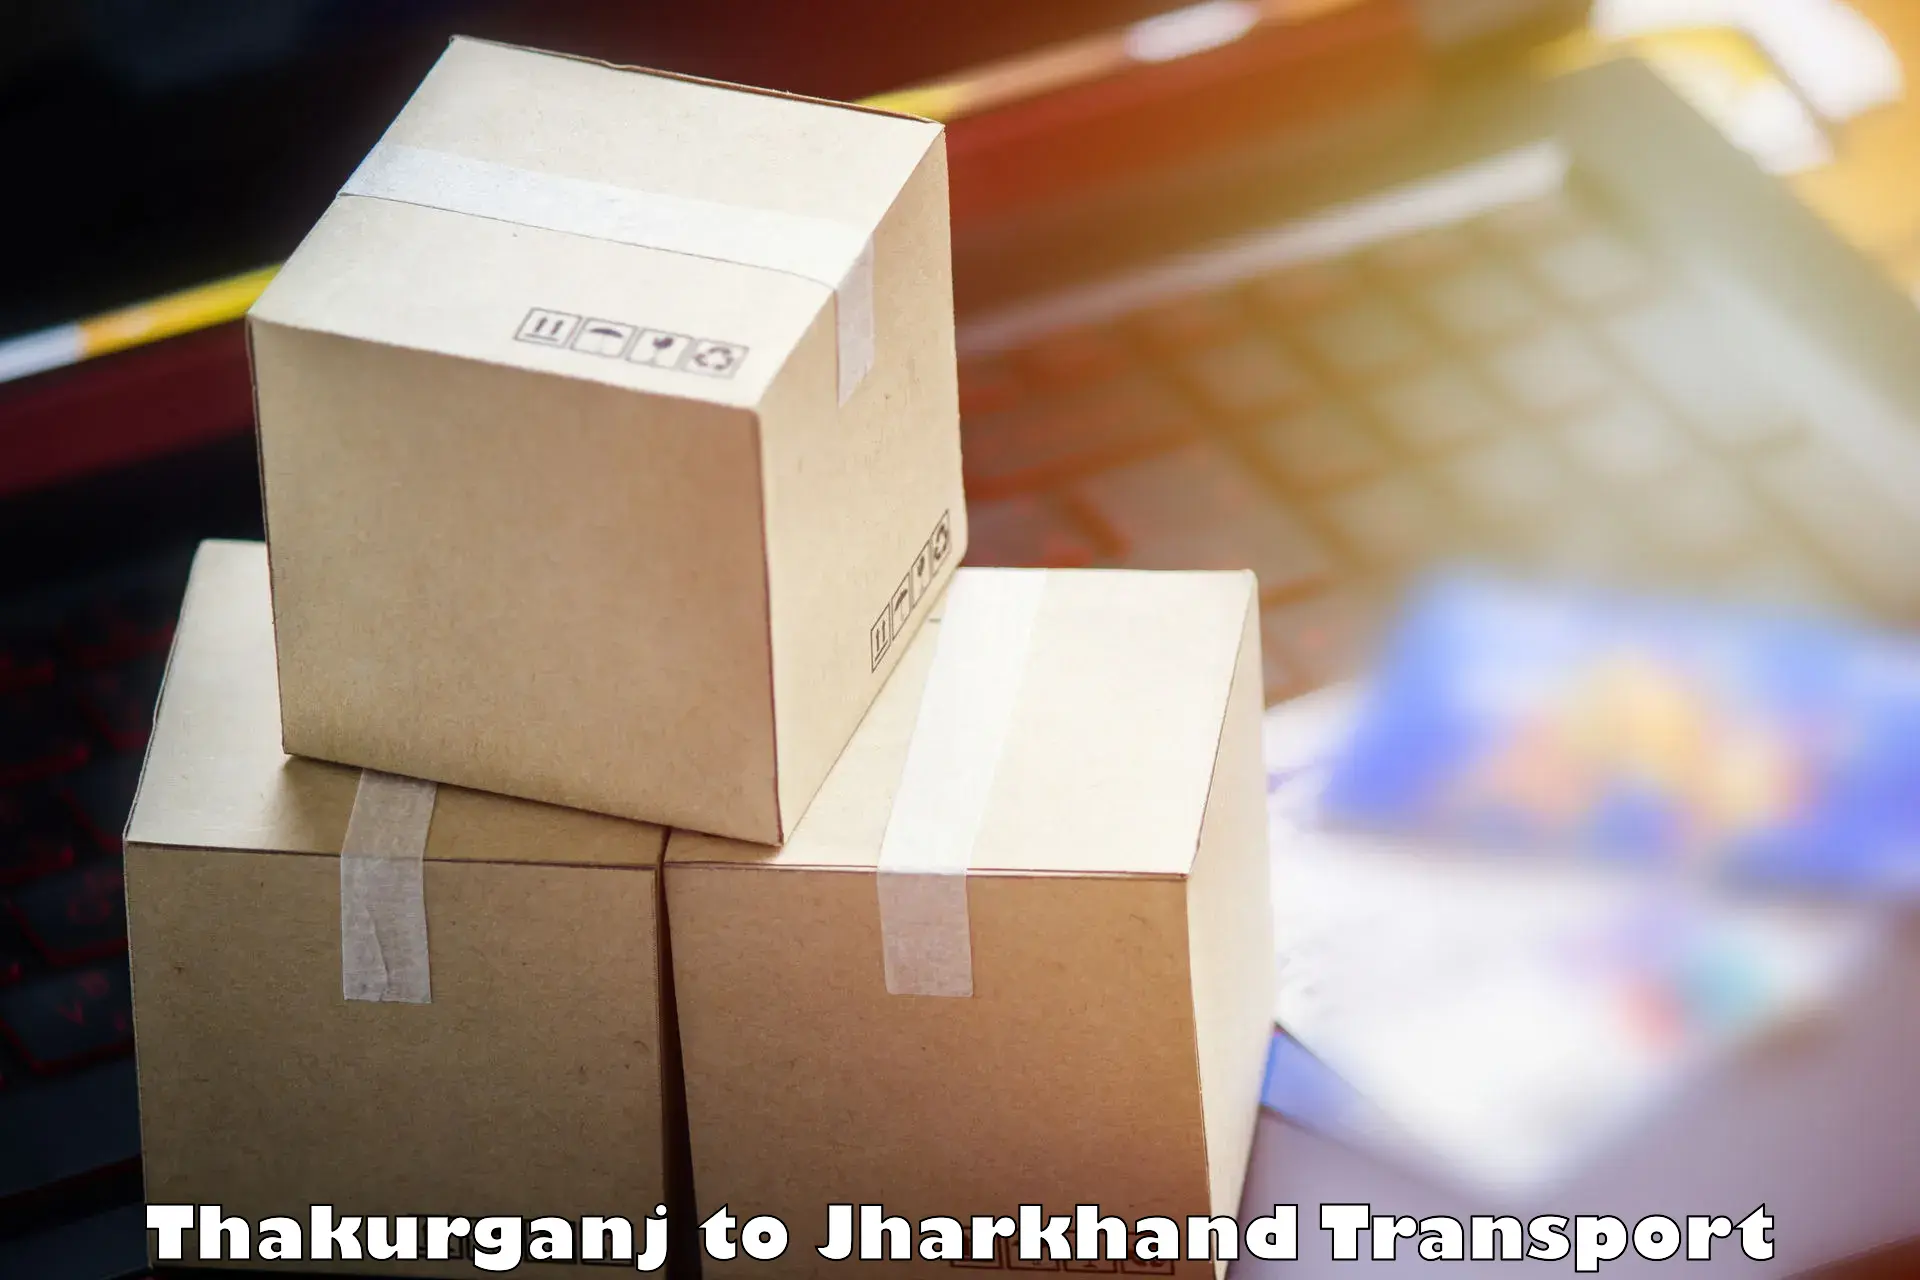 Commercial transport service Thakurganj to Dhanbad